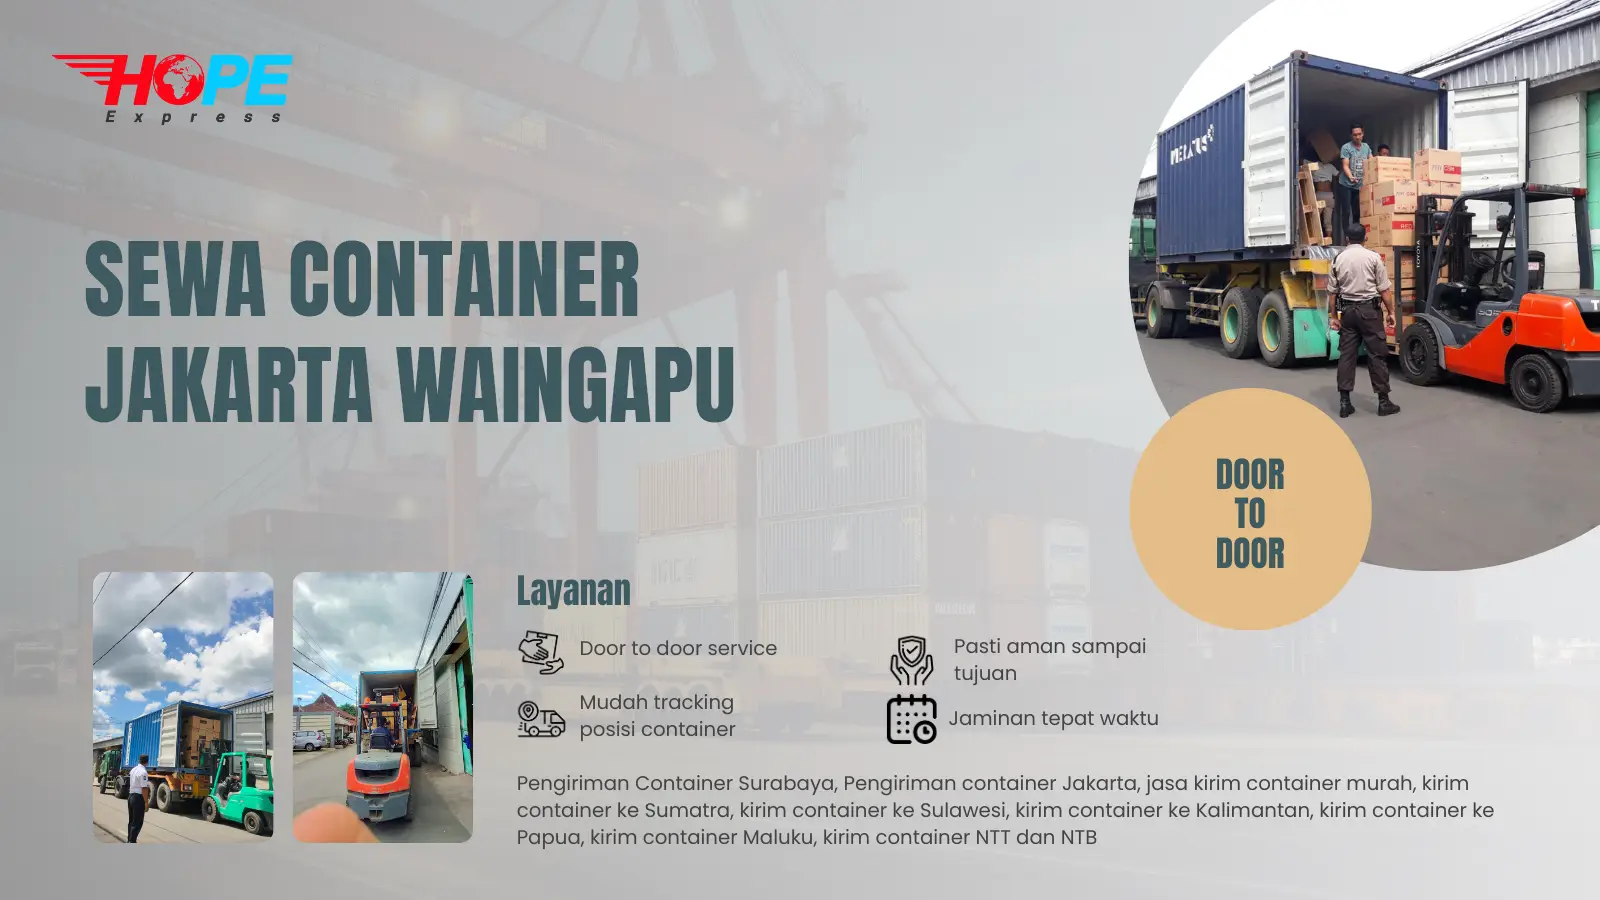 Sewa Container Jakarta Waingapu